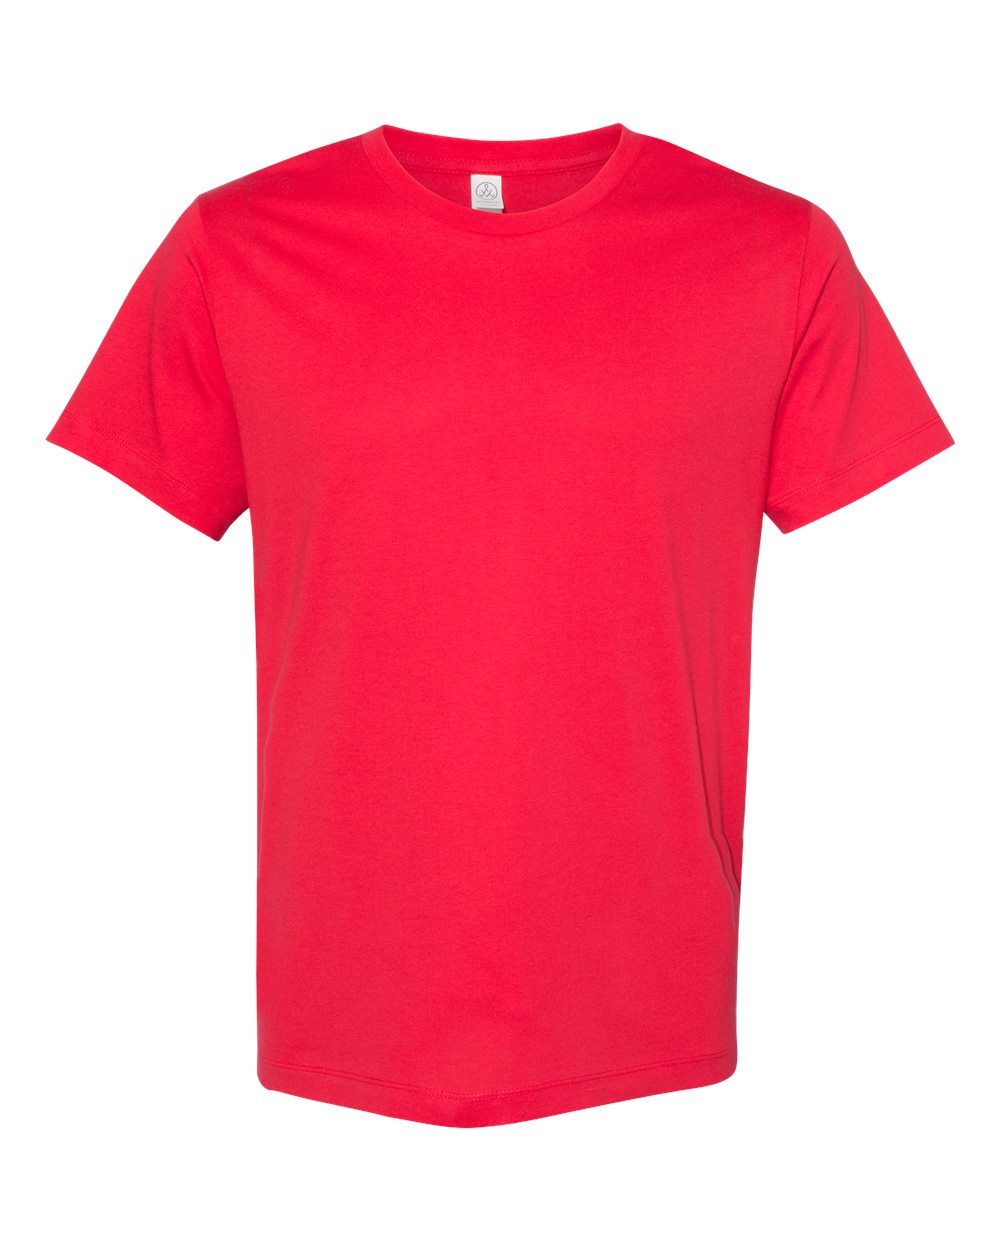 Download Alternative Mens Ringspun Jersey Go-To Tee Shirt 1070 up ...